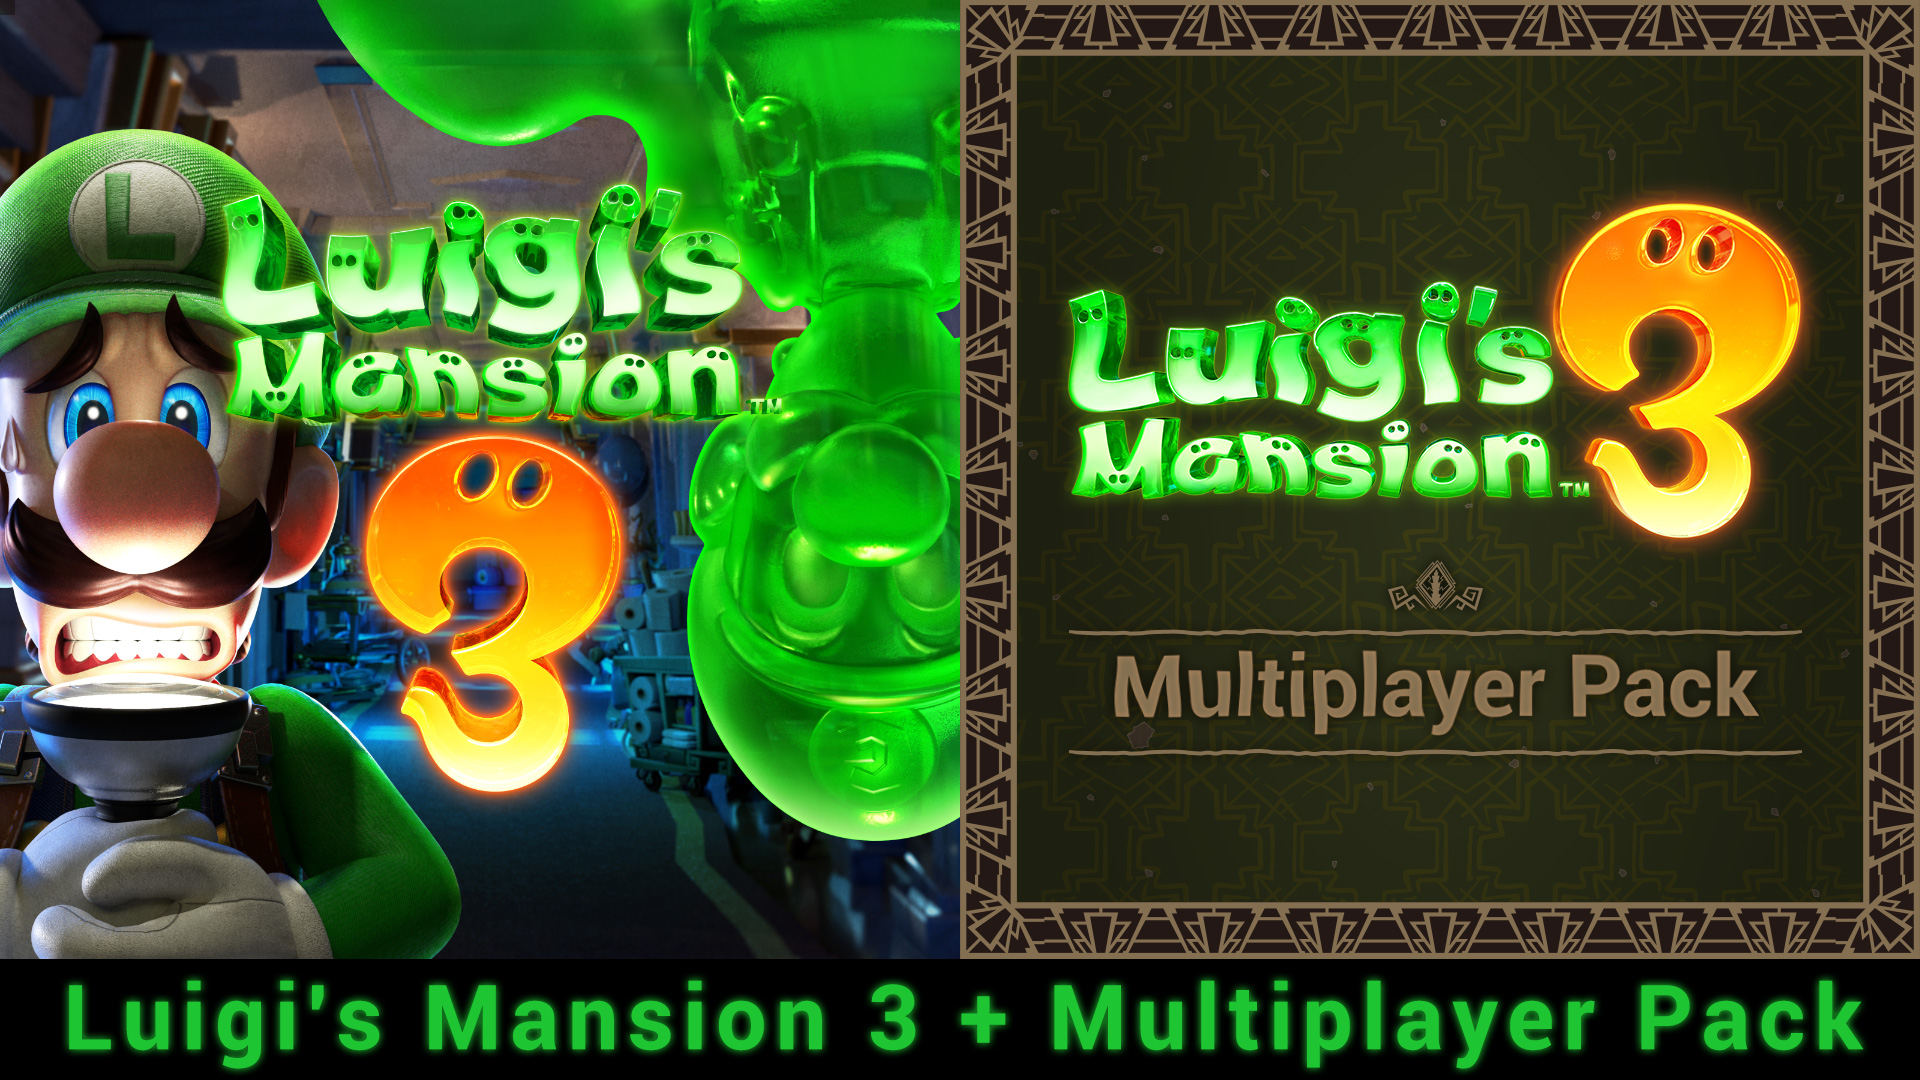 Luigi's Mansion 3 + Multiplayer Pack